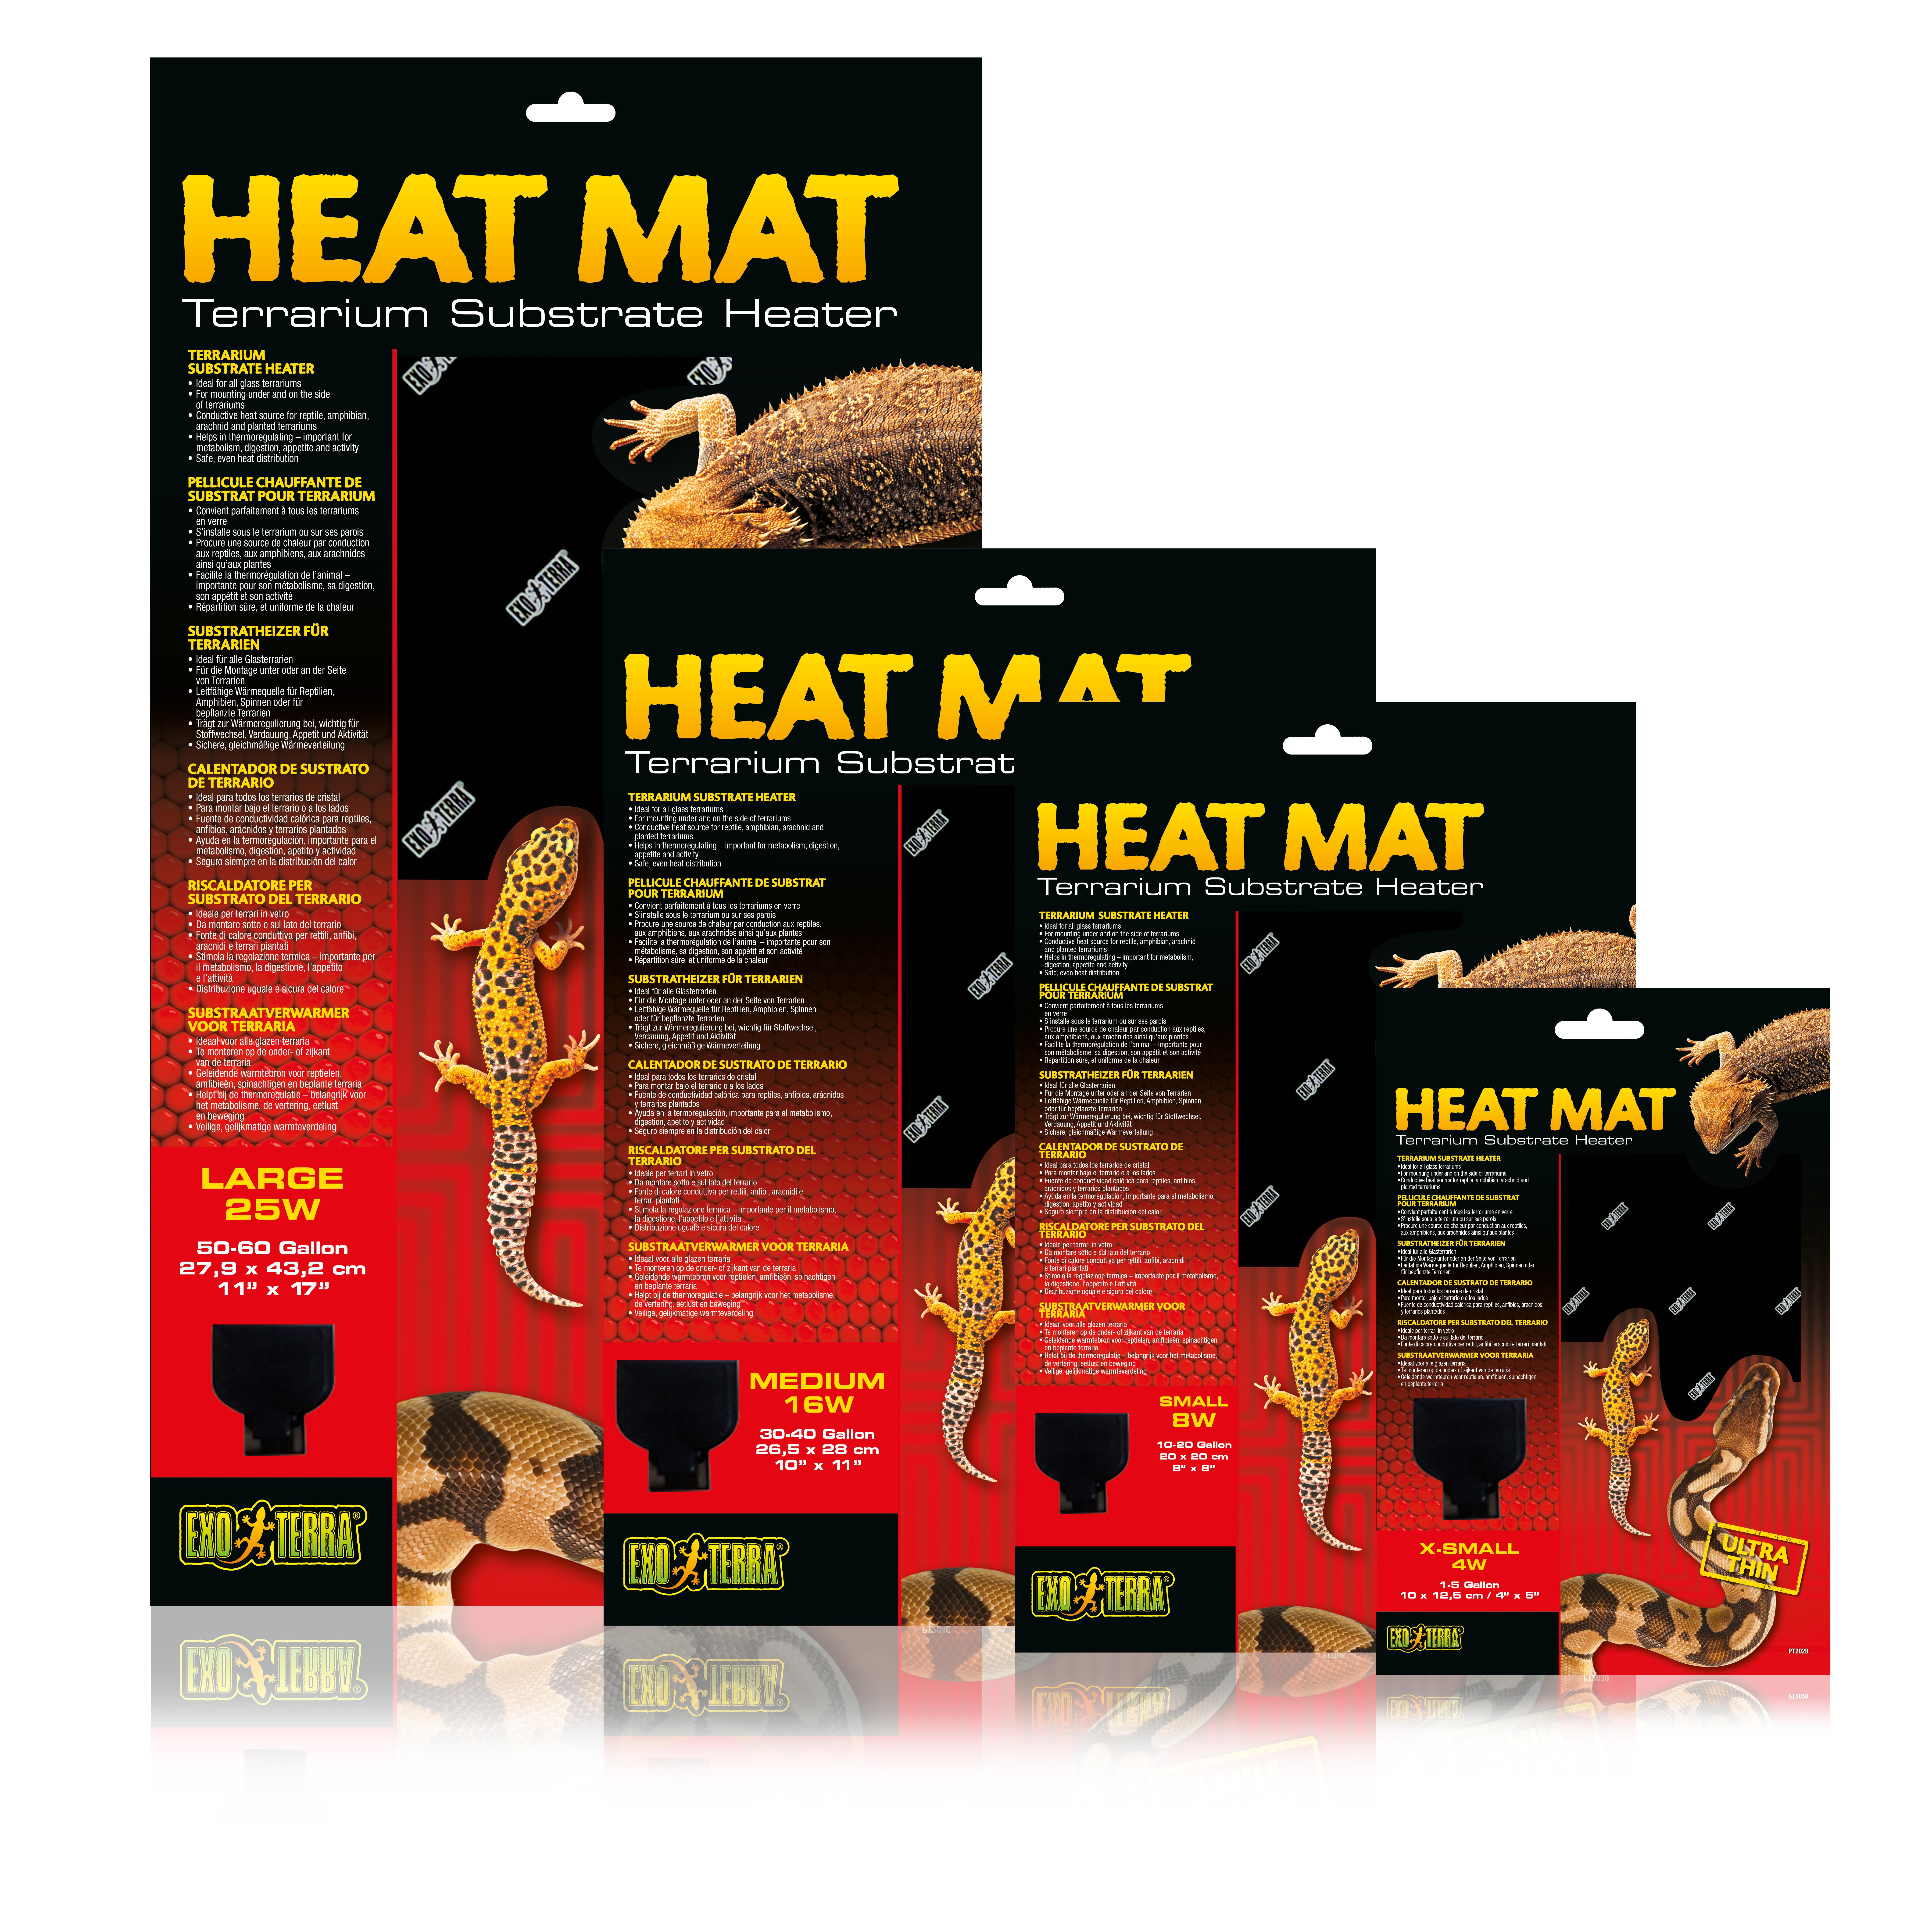 Ex heat mat terr. substrate heater - <Product shot>